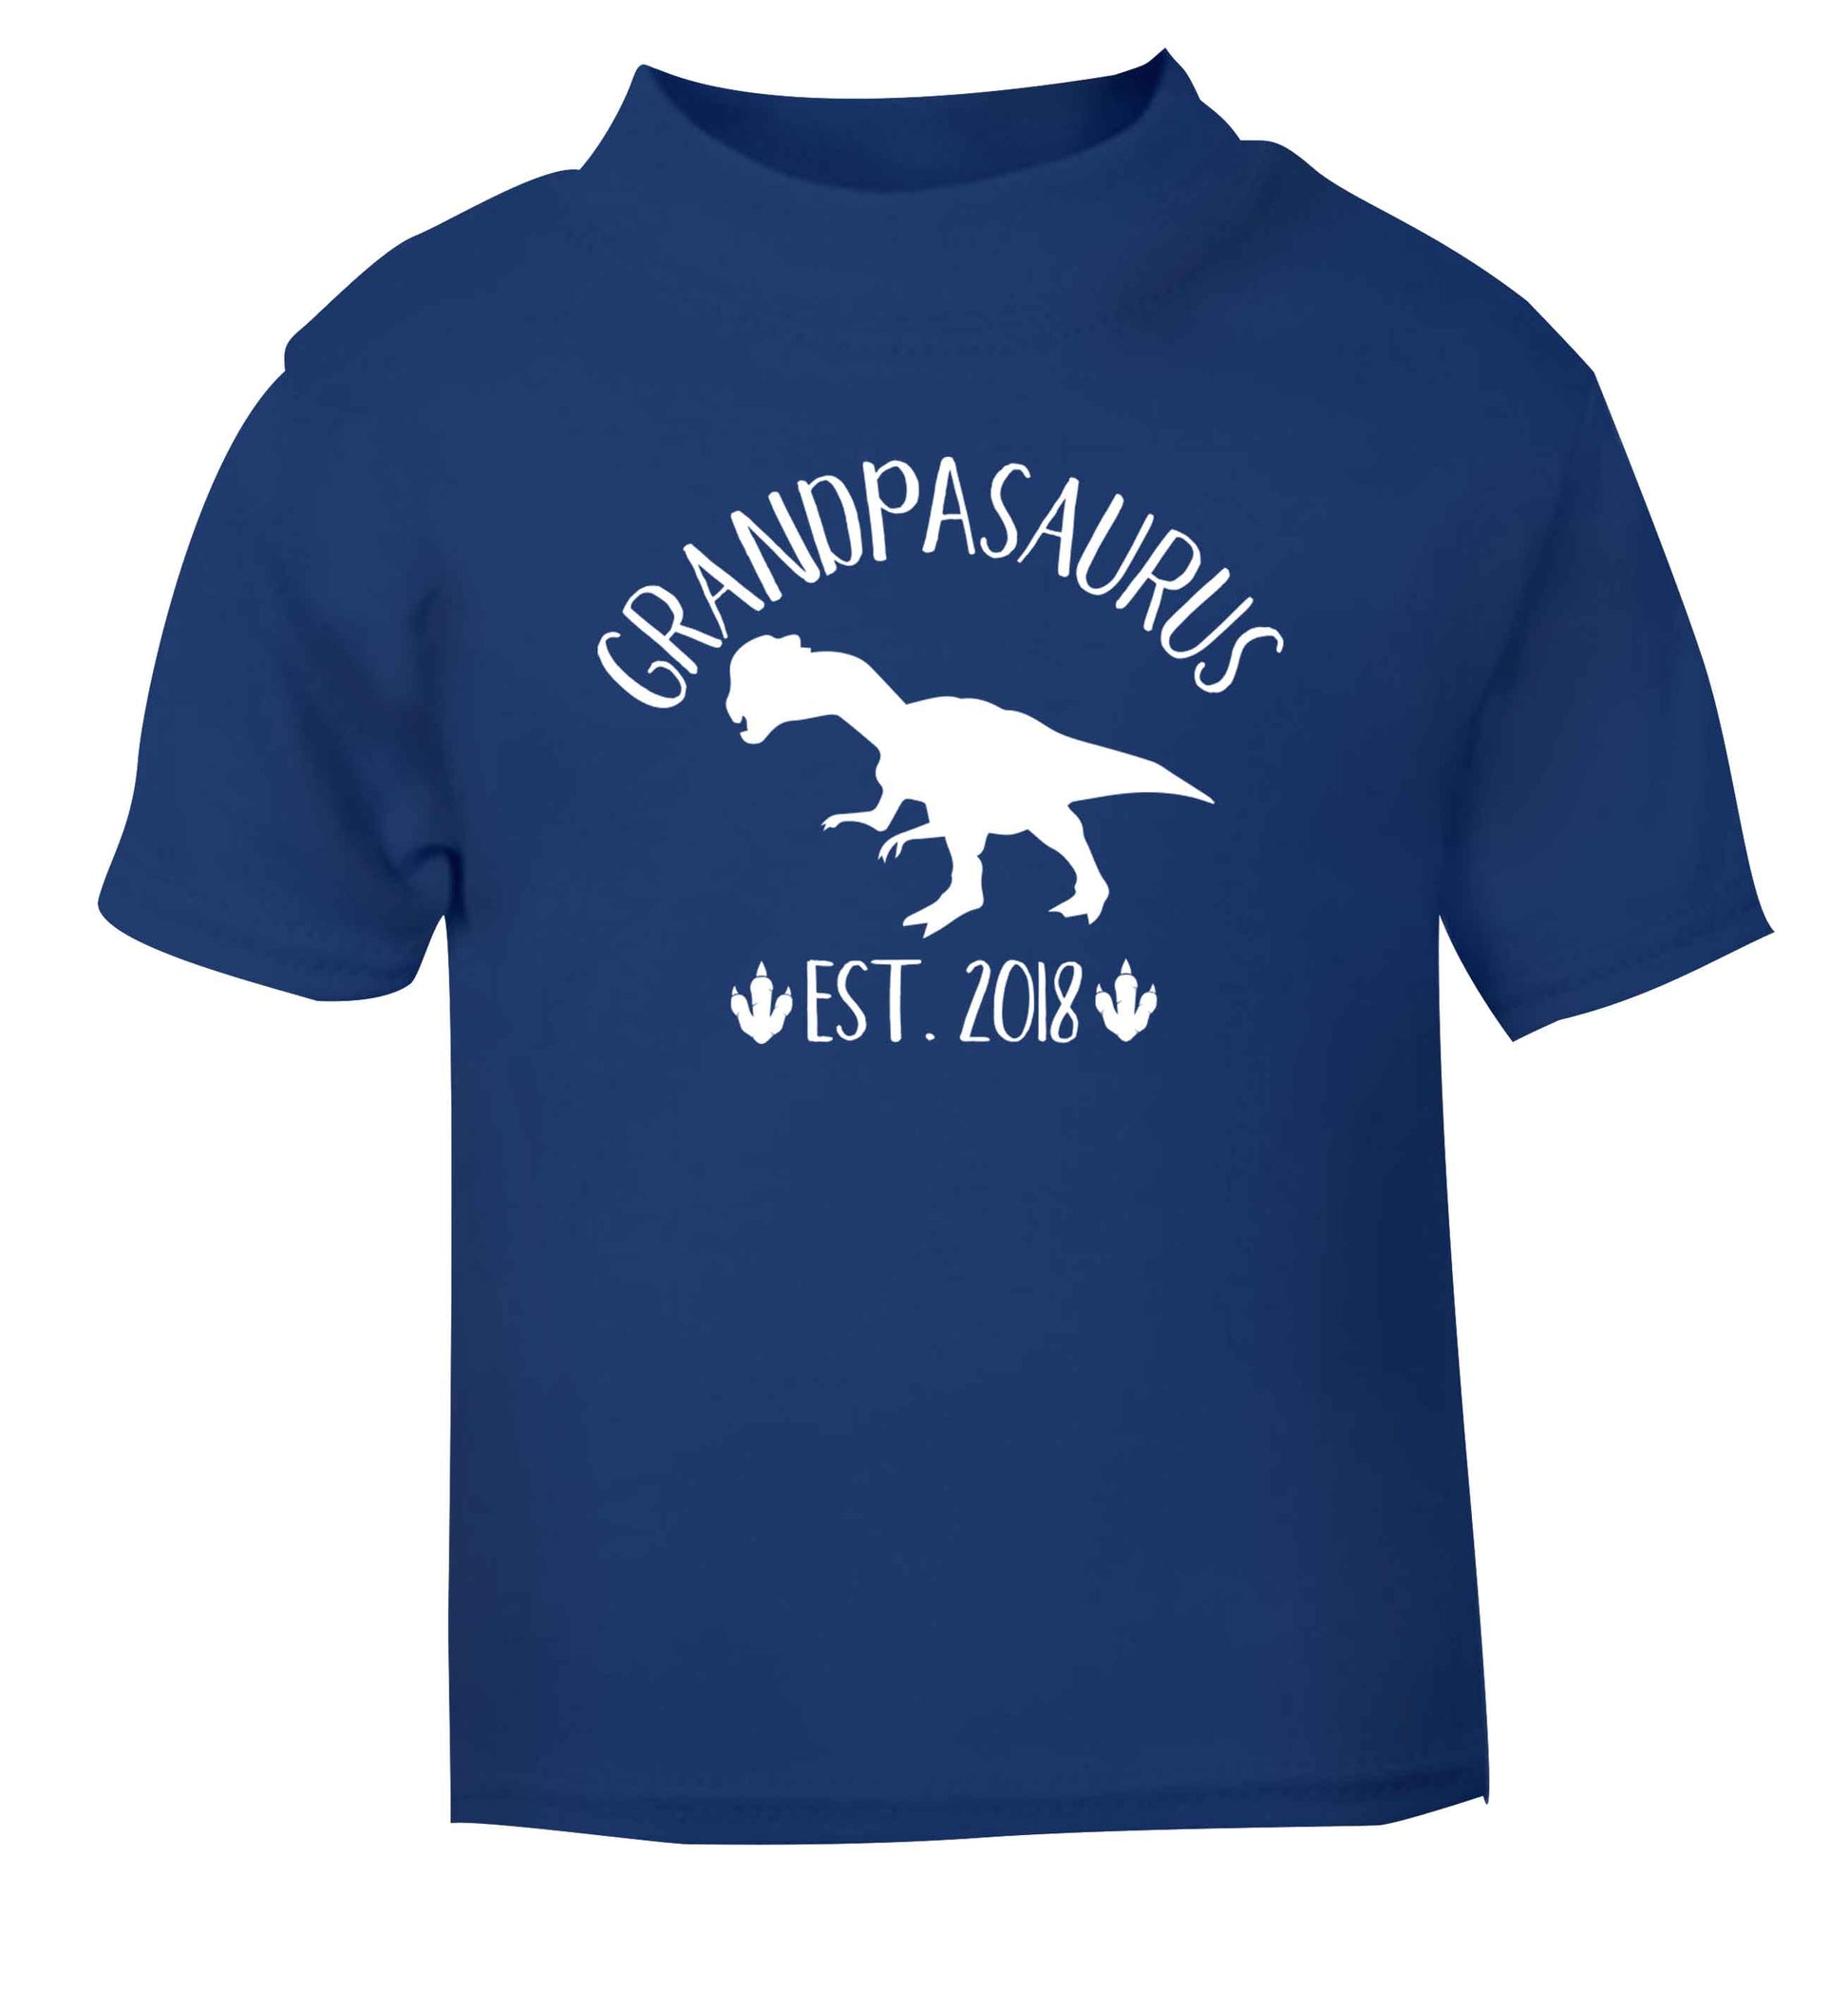 Personalised grandpasaurus since (custom date) blue Baby Toddler Tshirt 2 Years